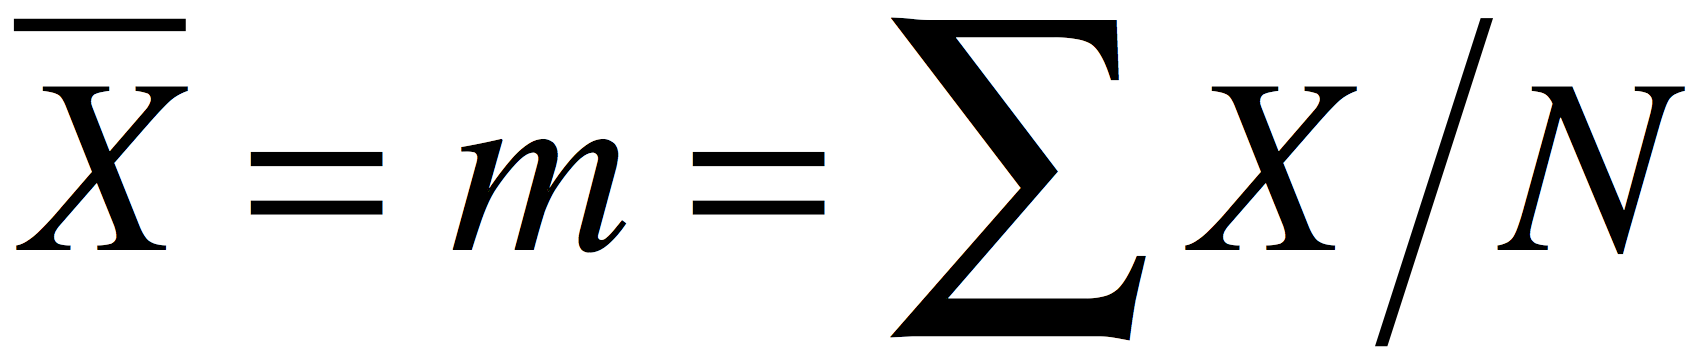 greek-symbol-for-sum-clipart-best